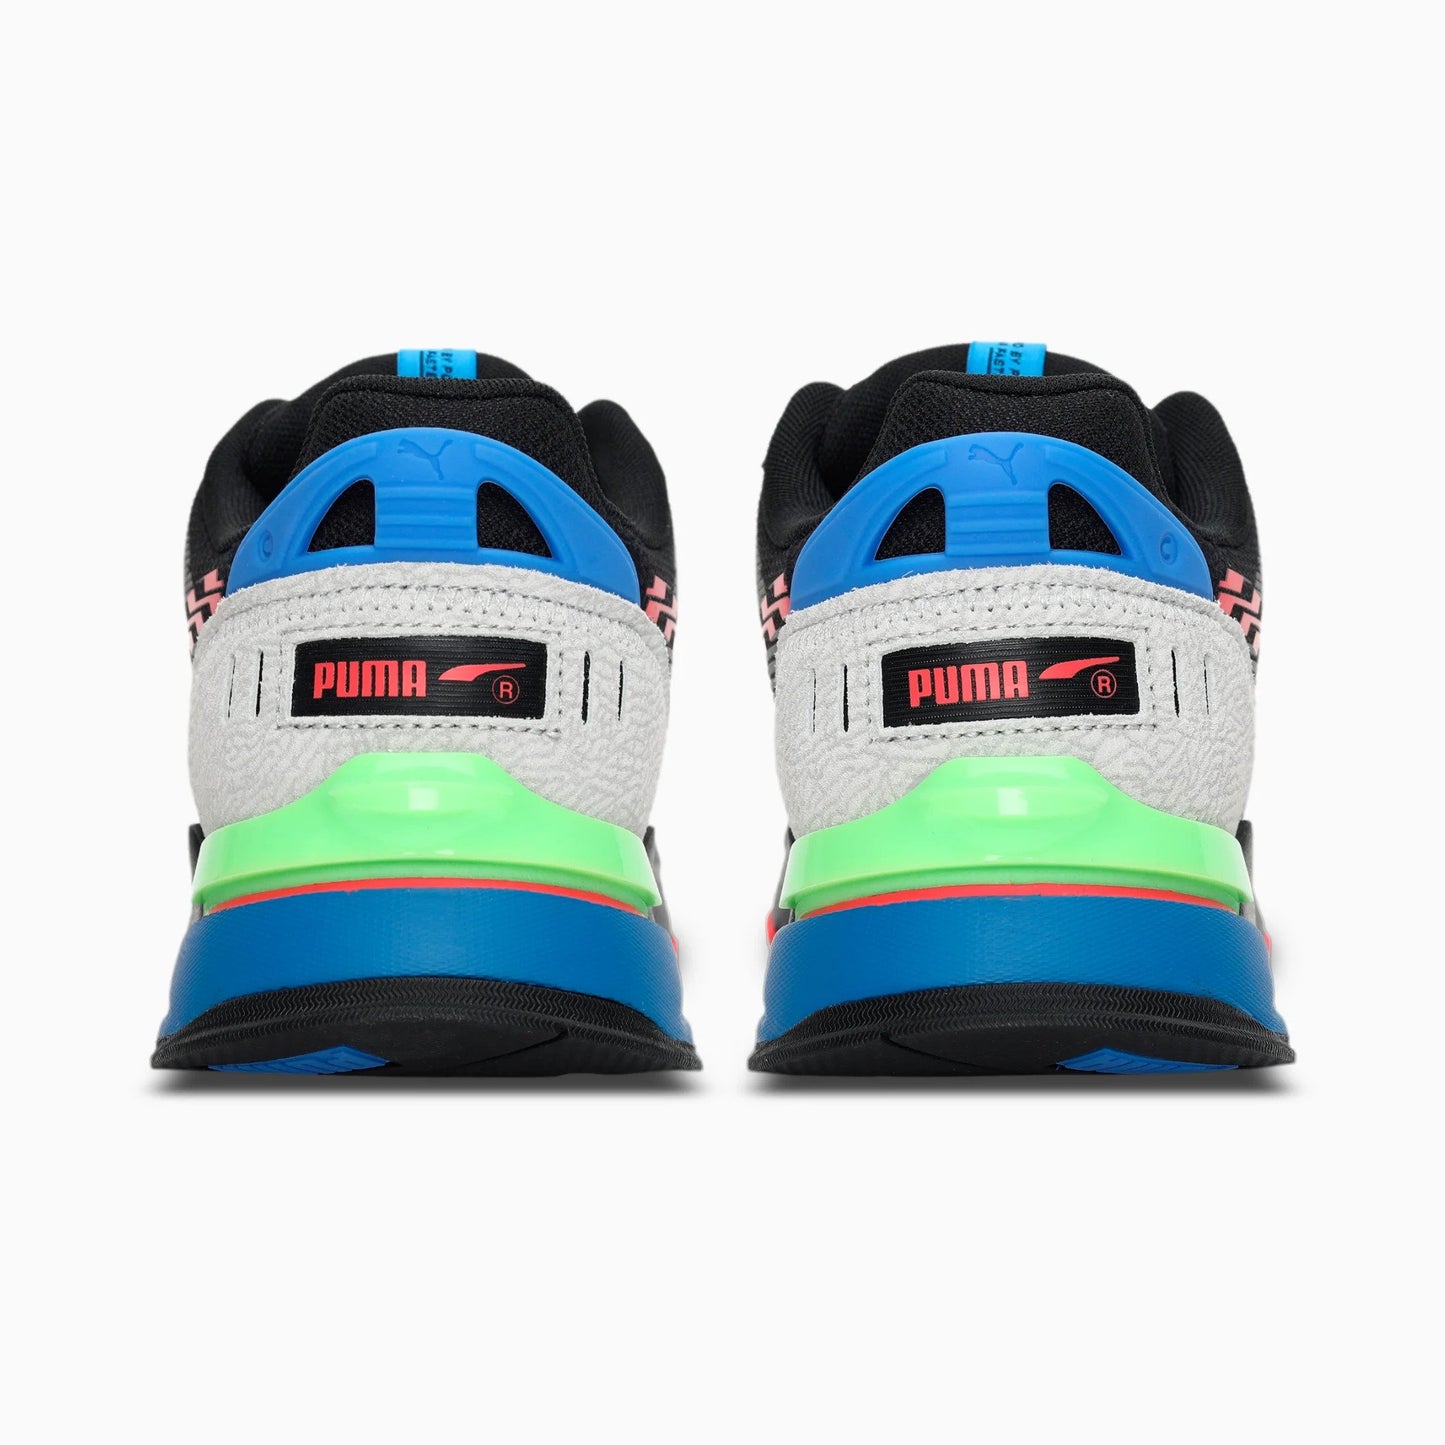 Mirage Sports Dazed Unisex Sneakers-382949 01